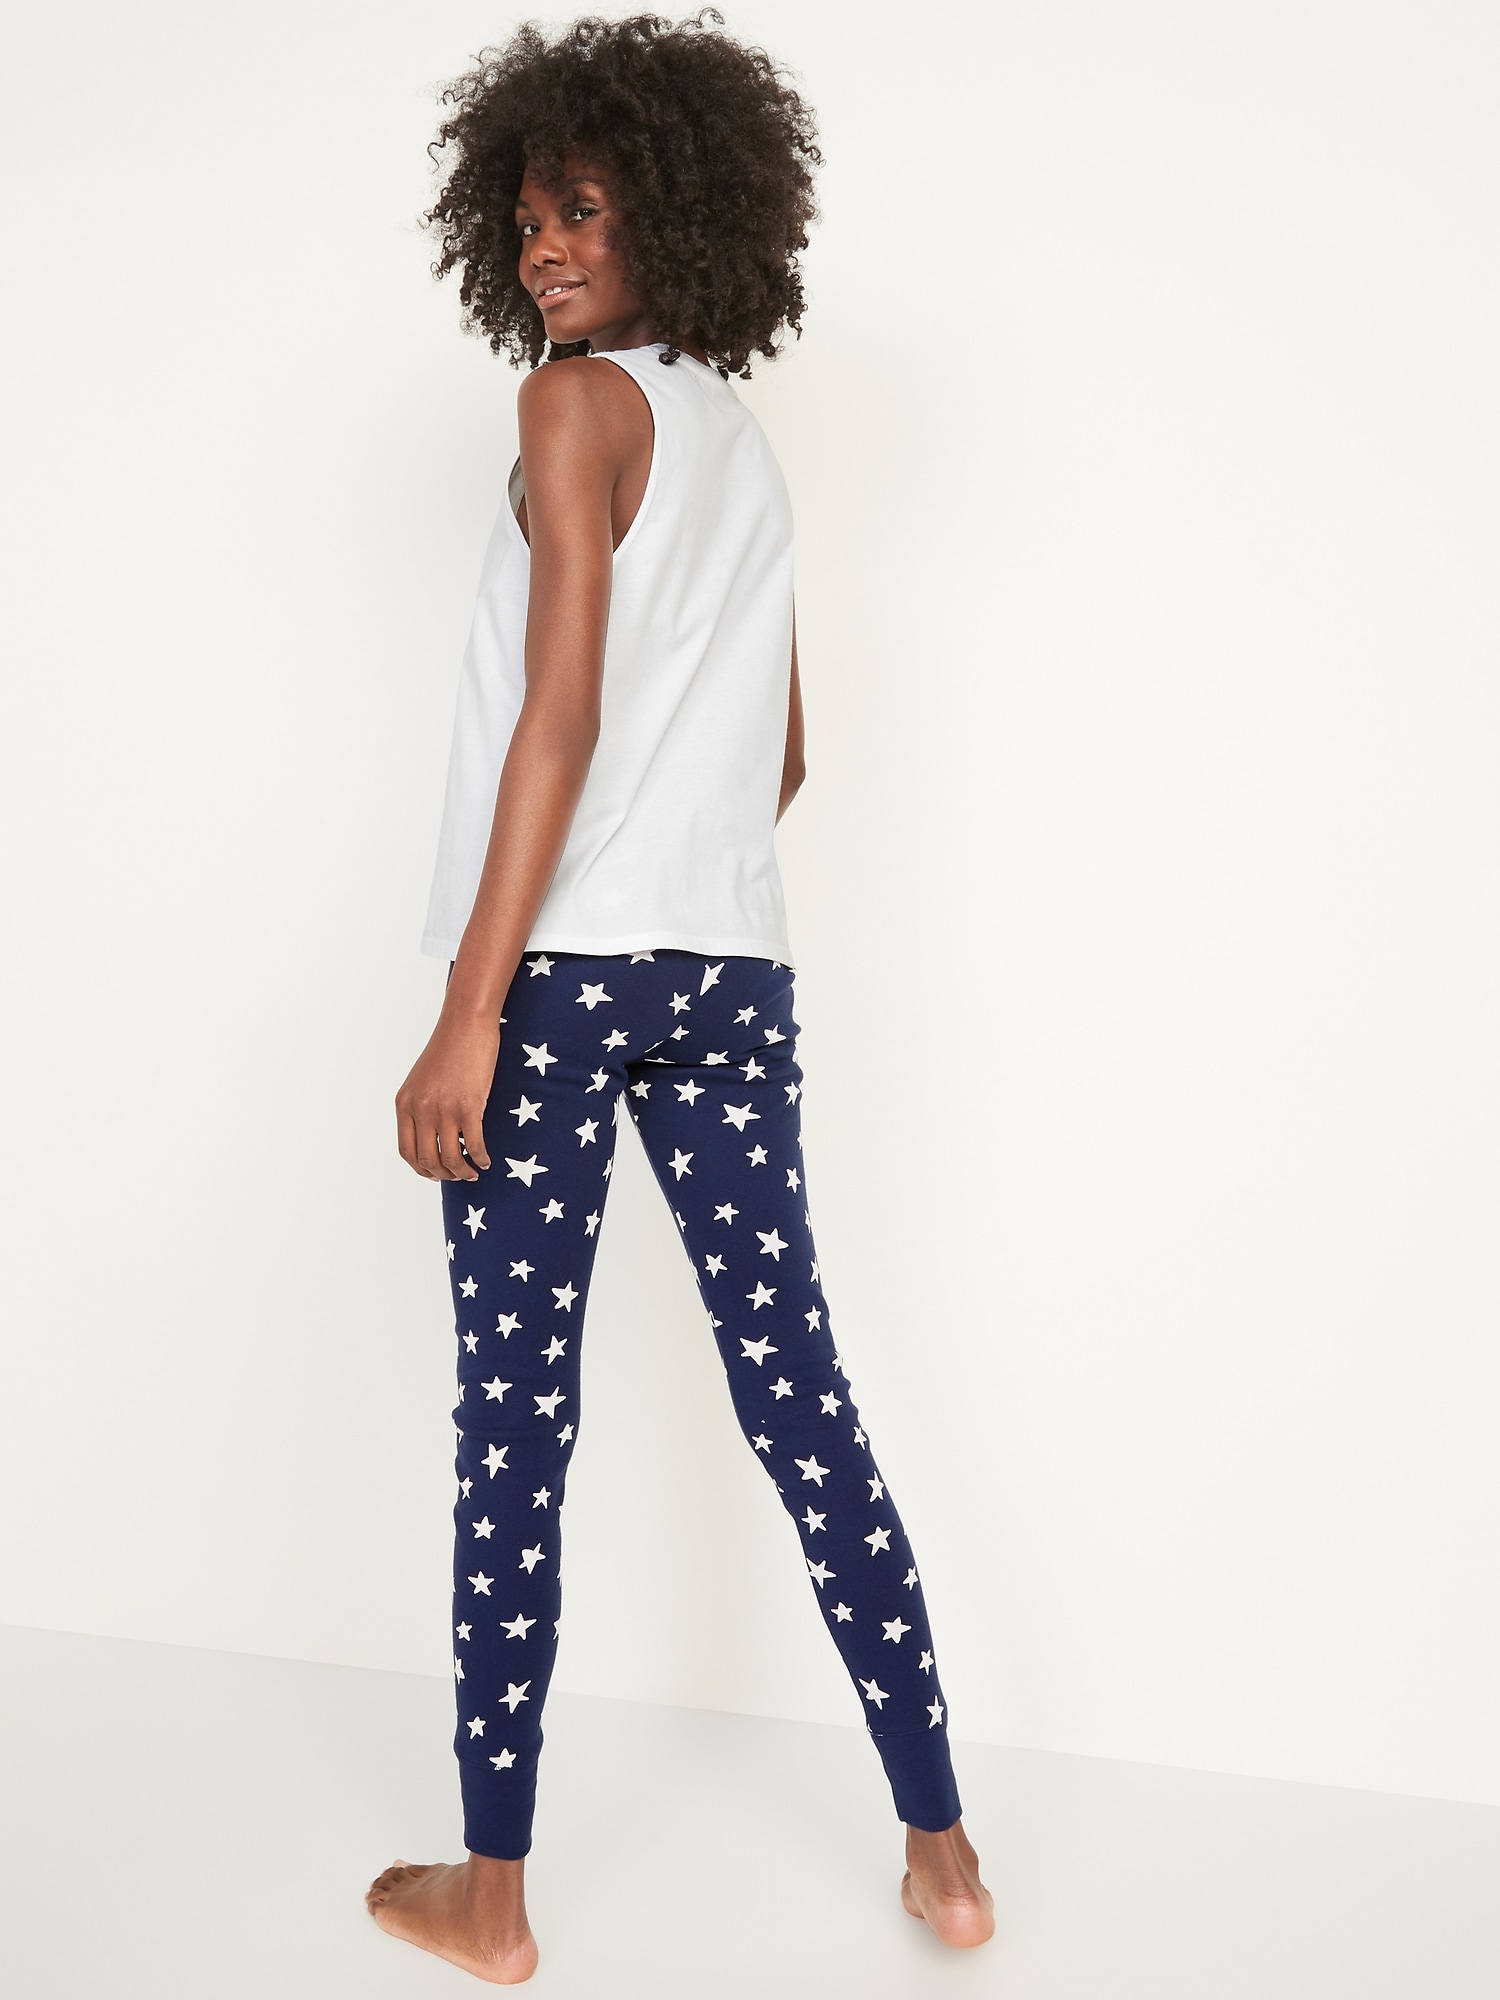 Mid-Rise Matching Print Pajama Leggings for Women